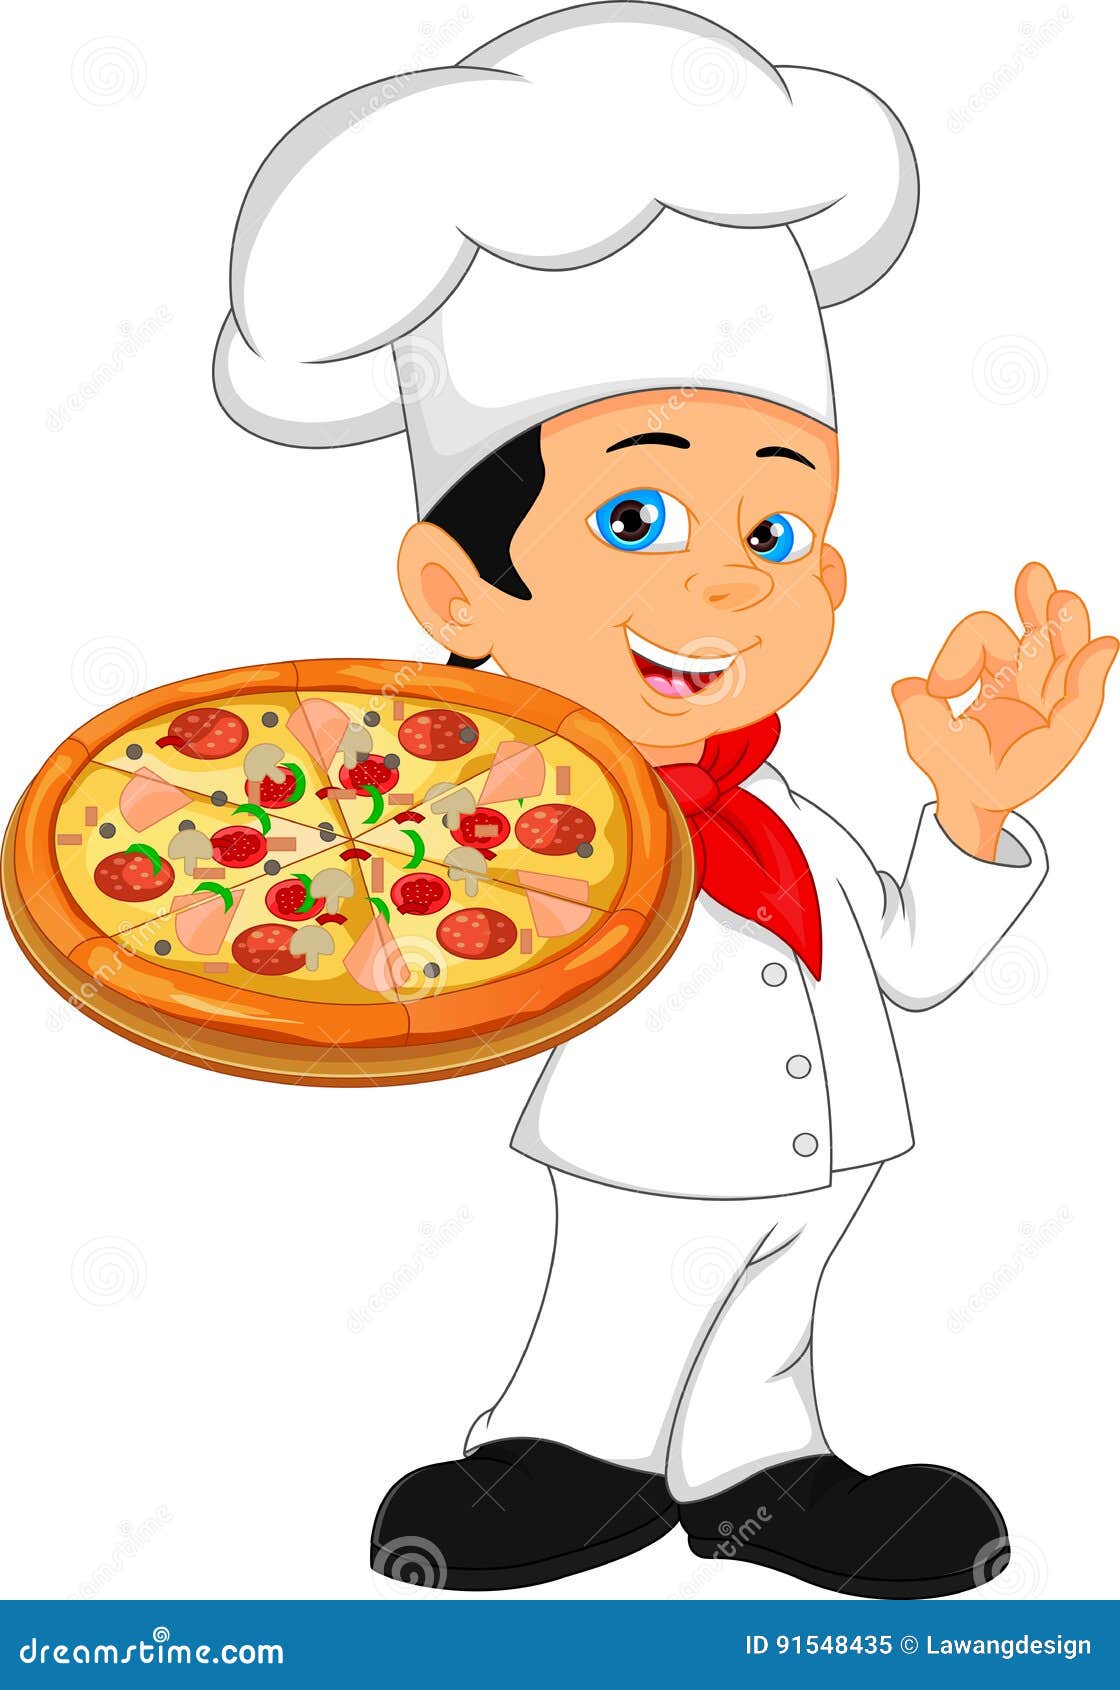 https://thumbs.dreamstime.com/z/boy-chef-cartoon-pizza-vector-illustration-91548435.jpg